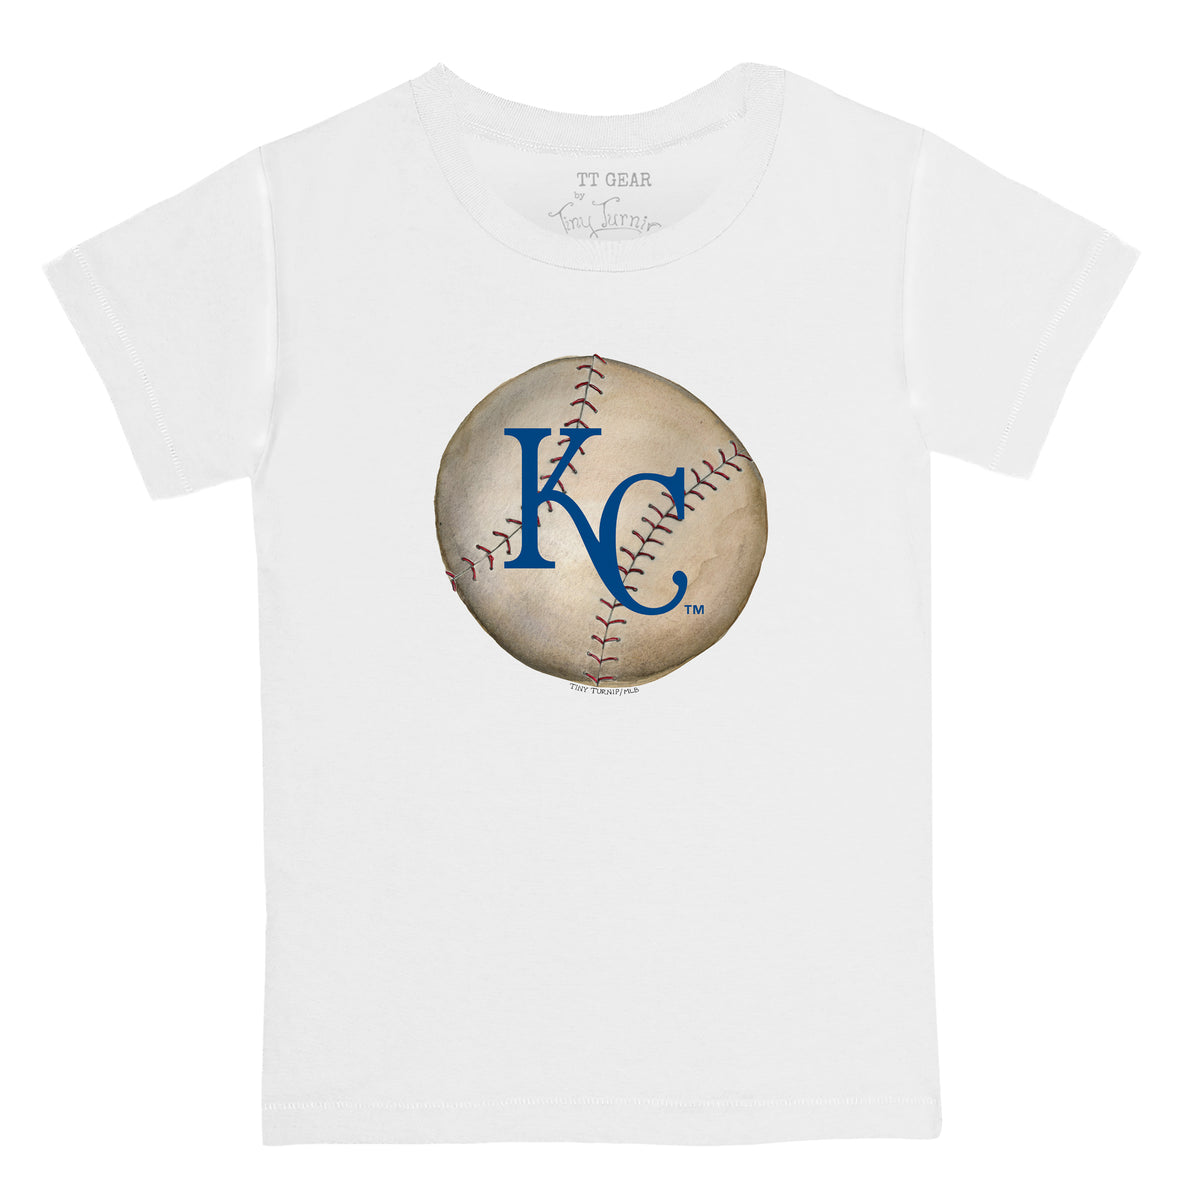 Lids Kansas City Royals Tiny Turnip Women's Hot Bats T-Shirt - White